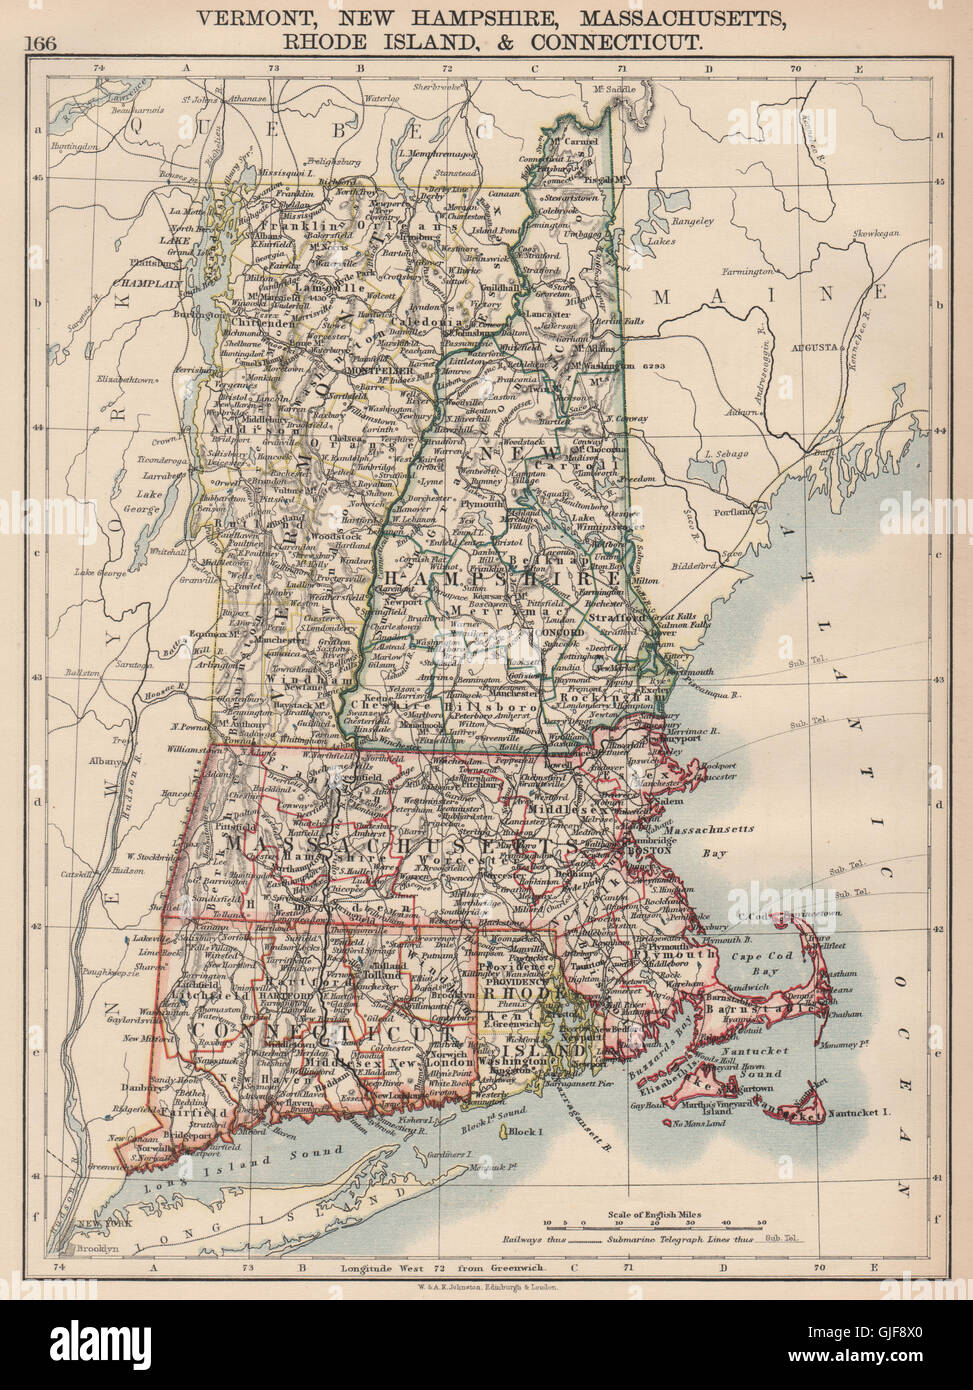 NEW ENGLAND. Vermont New Hampshire Massachusetts RI Connecticut, 1906 old map Stock Photo